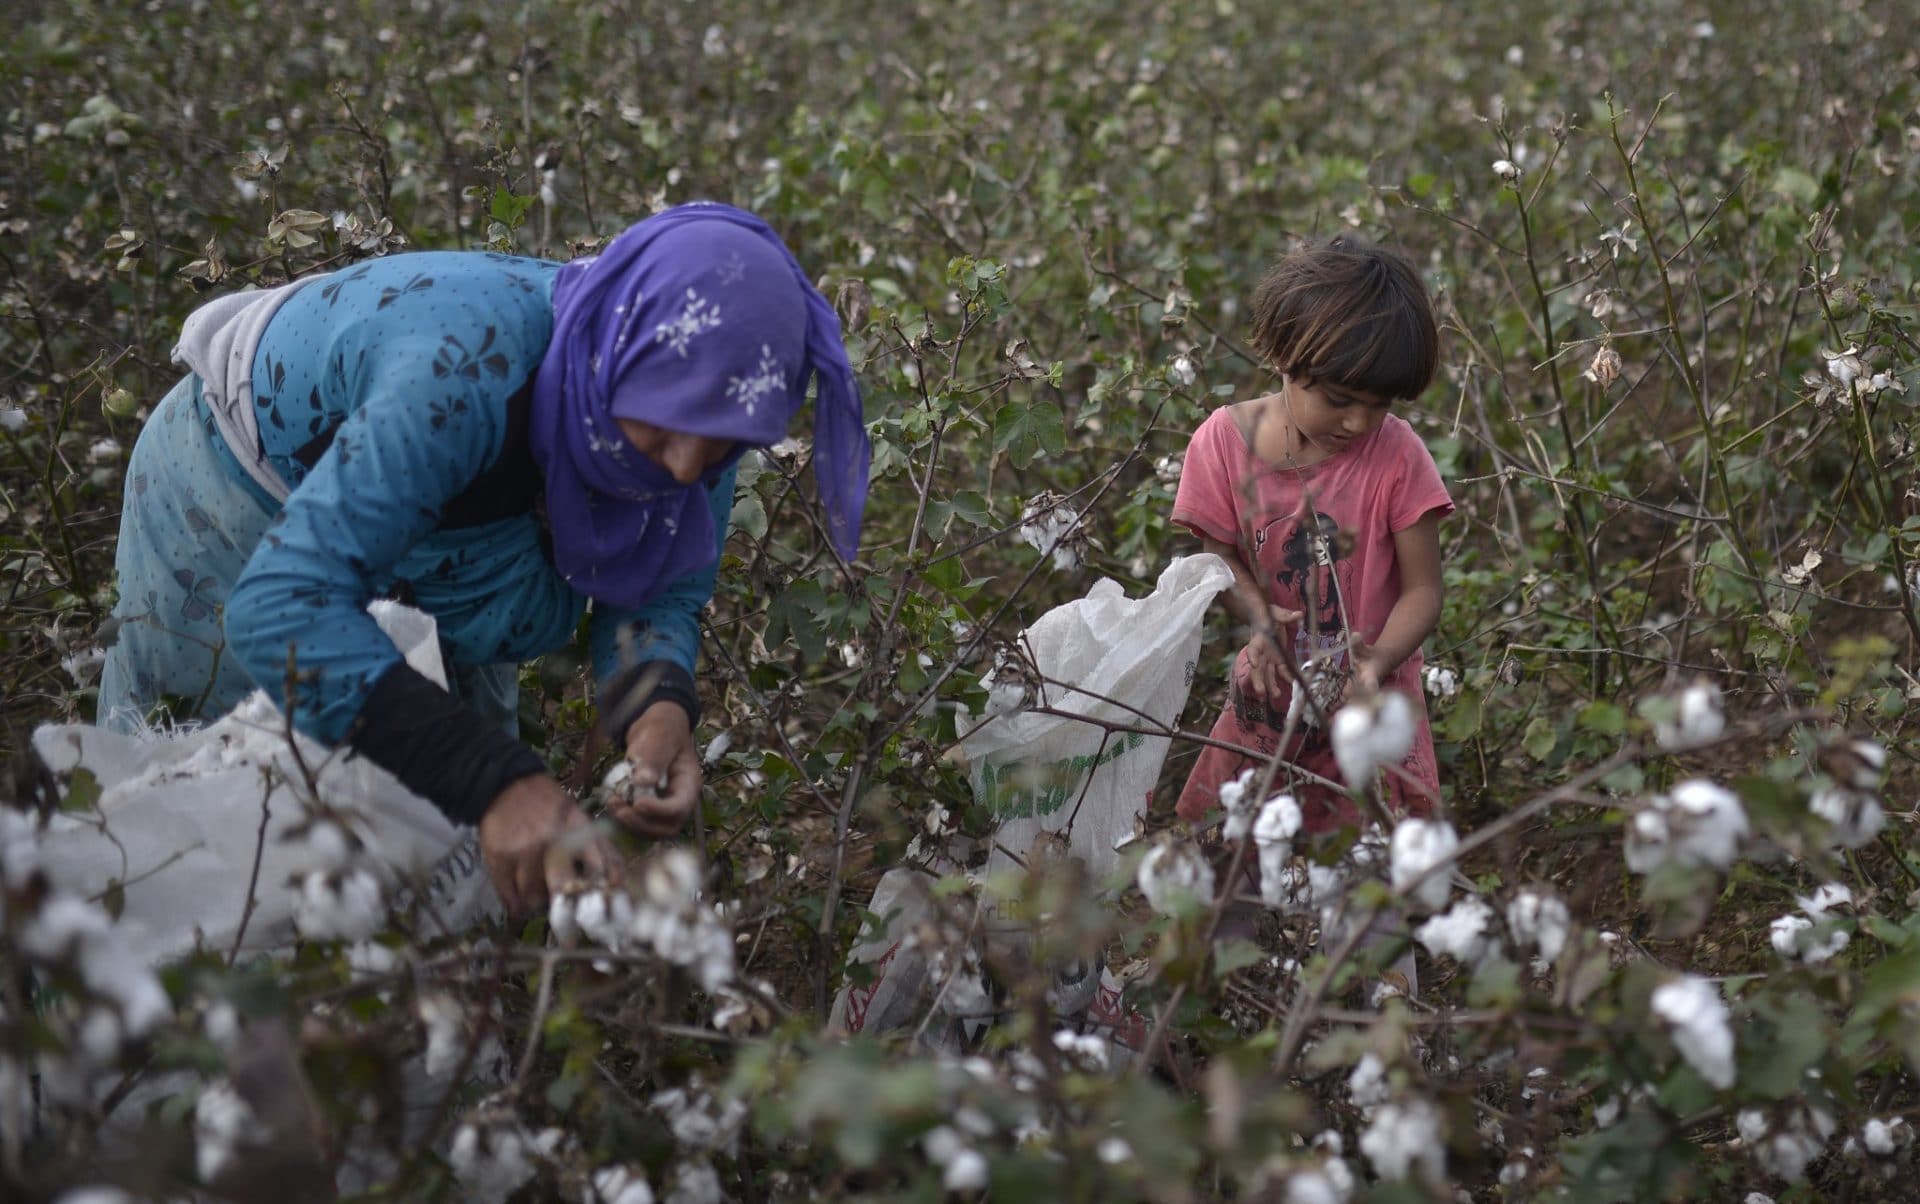 Syrian refugees working in cotton fields in Antalya, Turkey. Photo courtesy of Orlok via Shutterstock